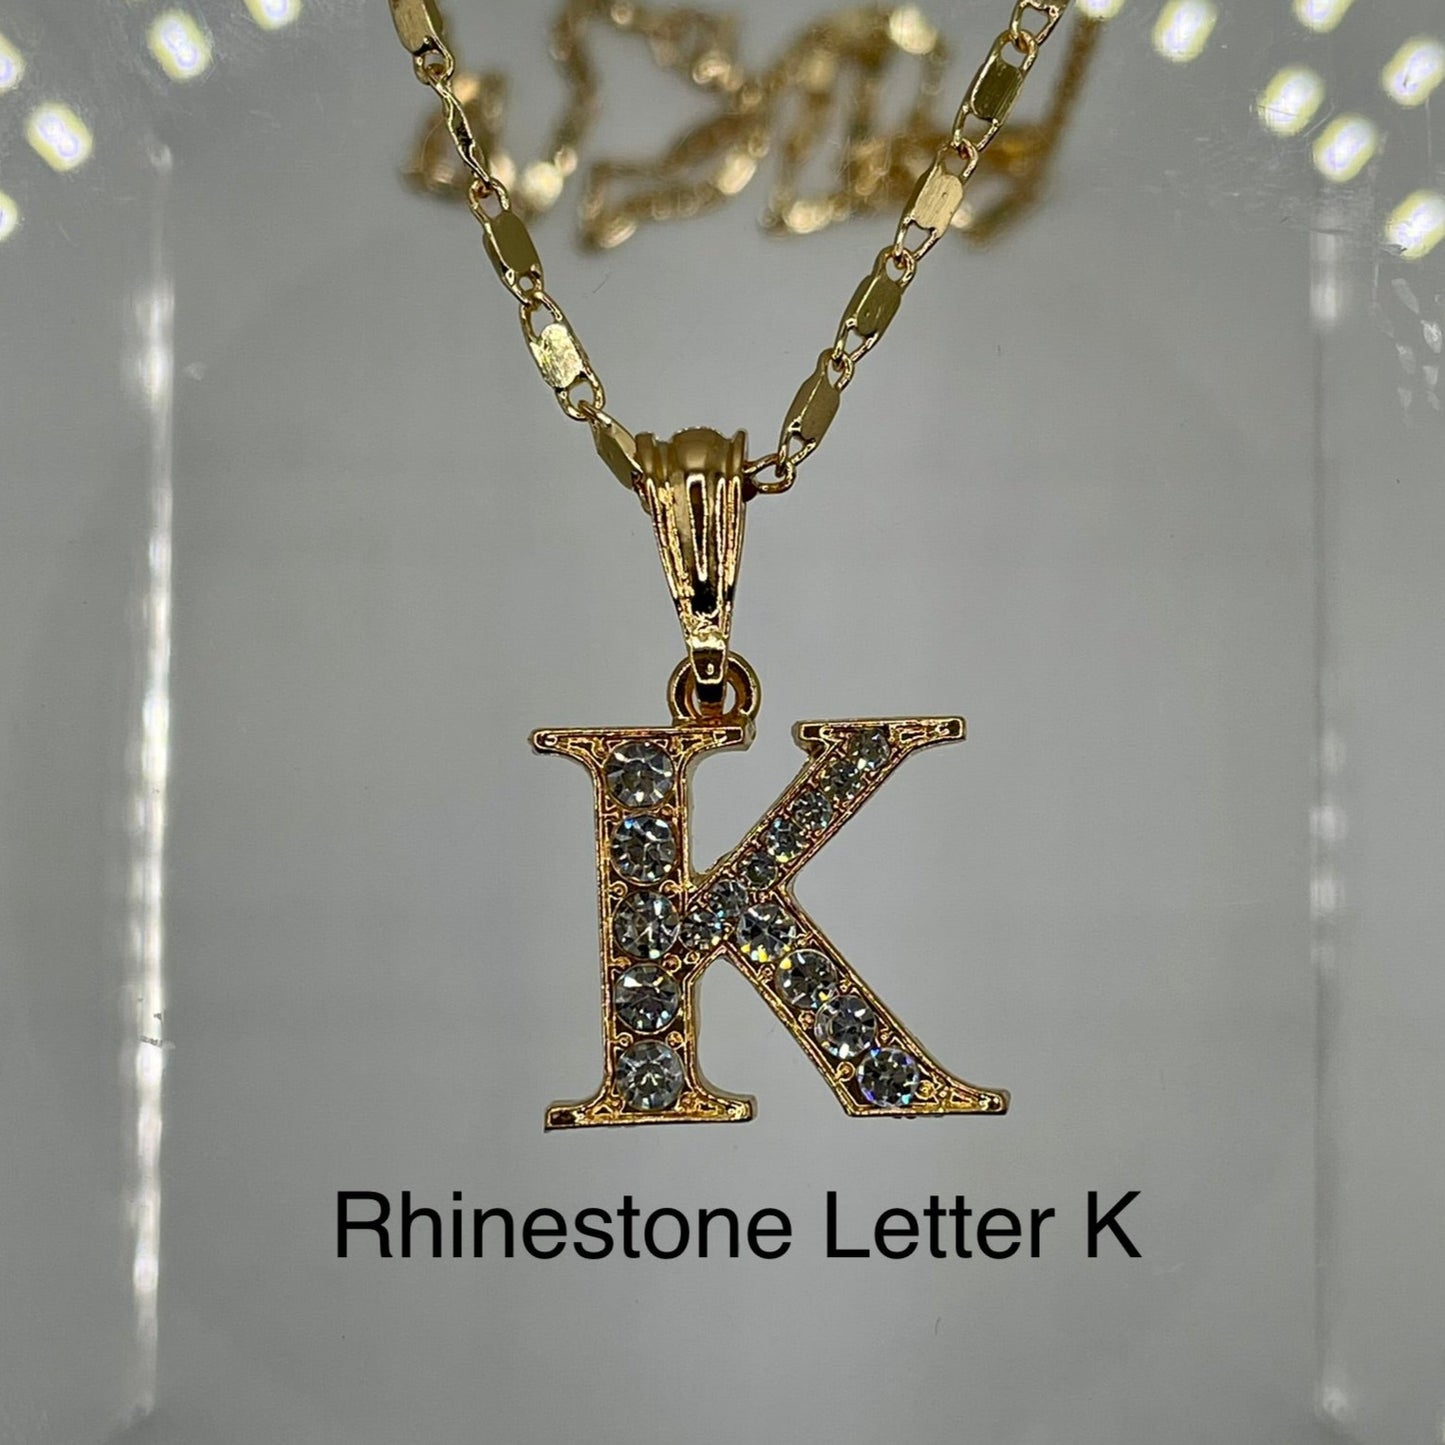 Rhinestone letter K pendant 14k gold plated on gold plated cute necklace. Letter pendants.